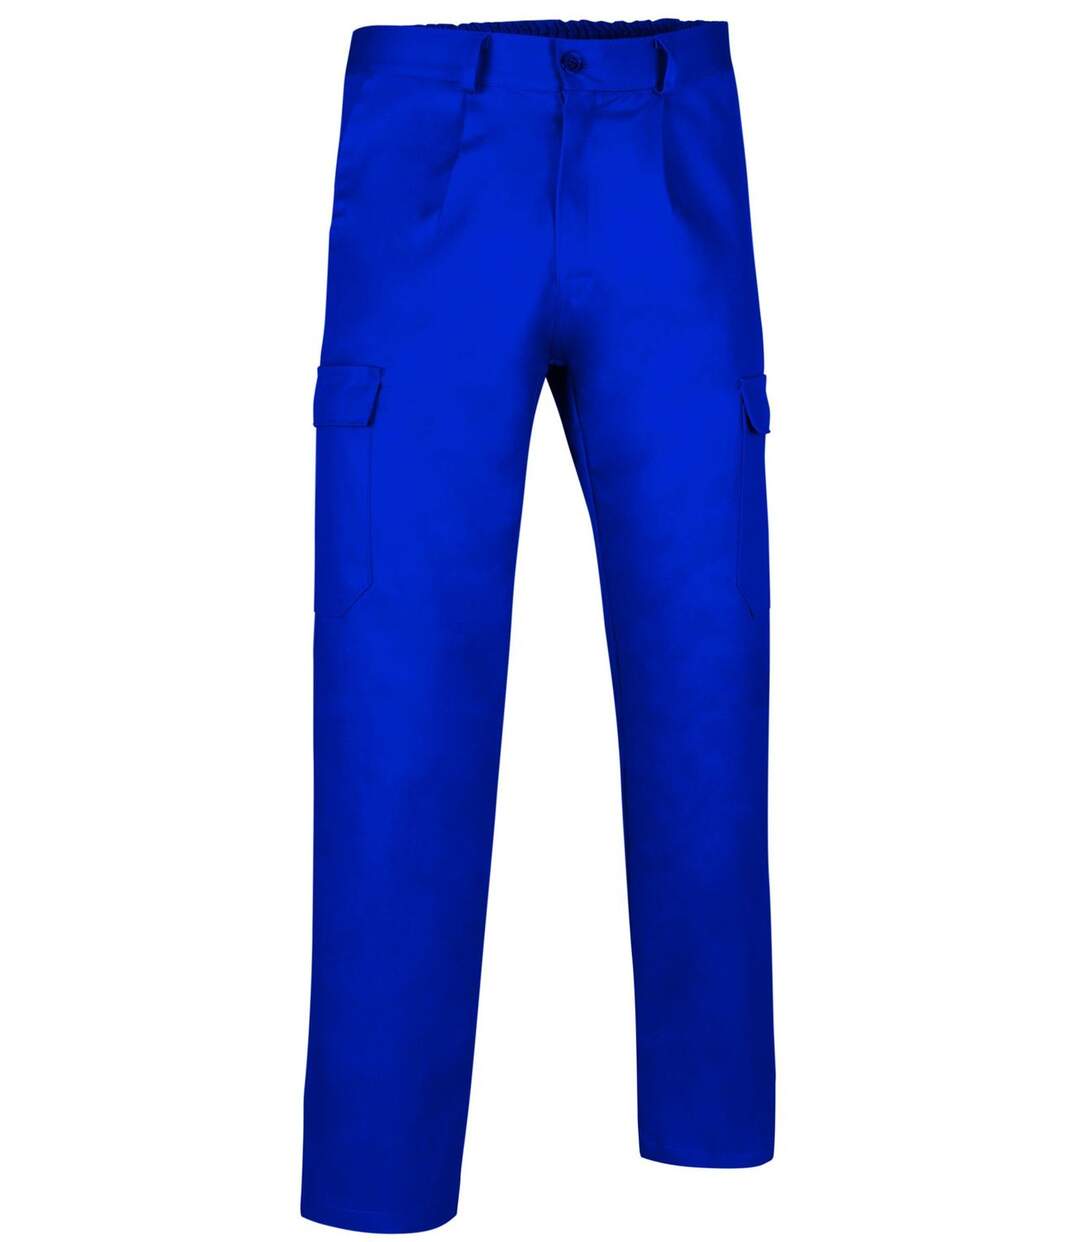 Pantalon de travail multipoches - Homme - CHISPA - bleu azur